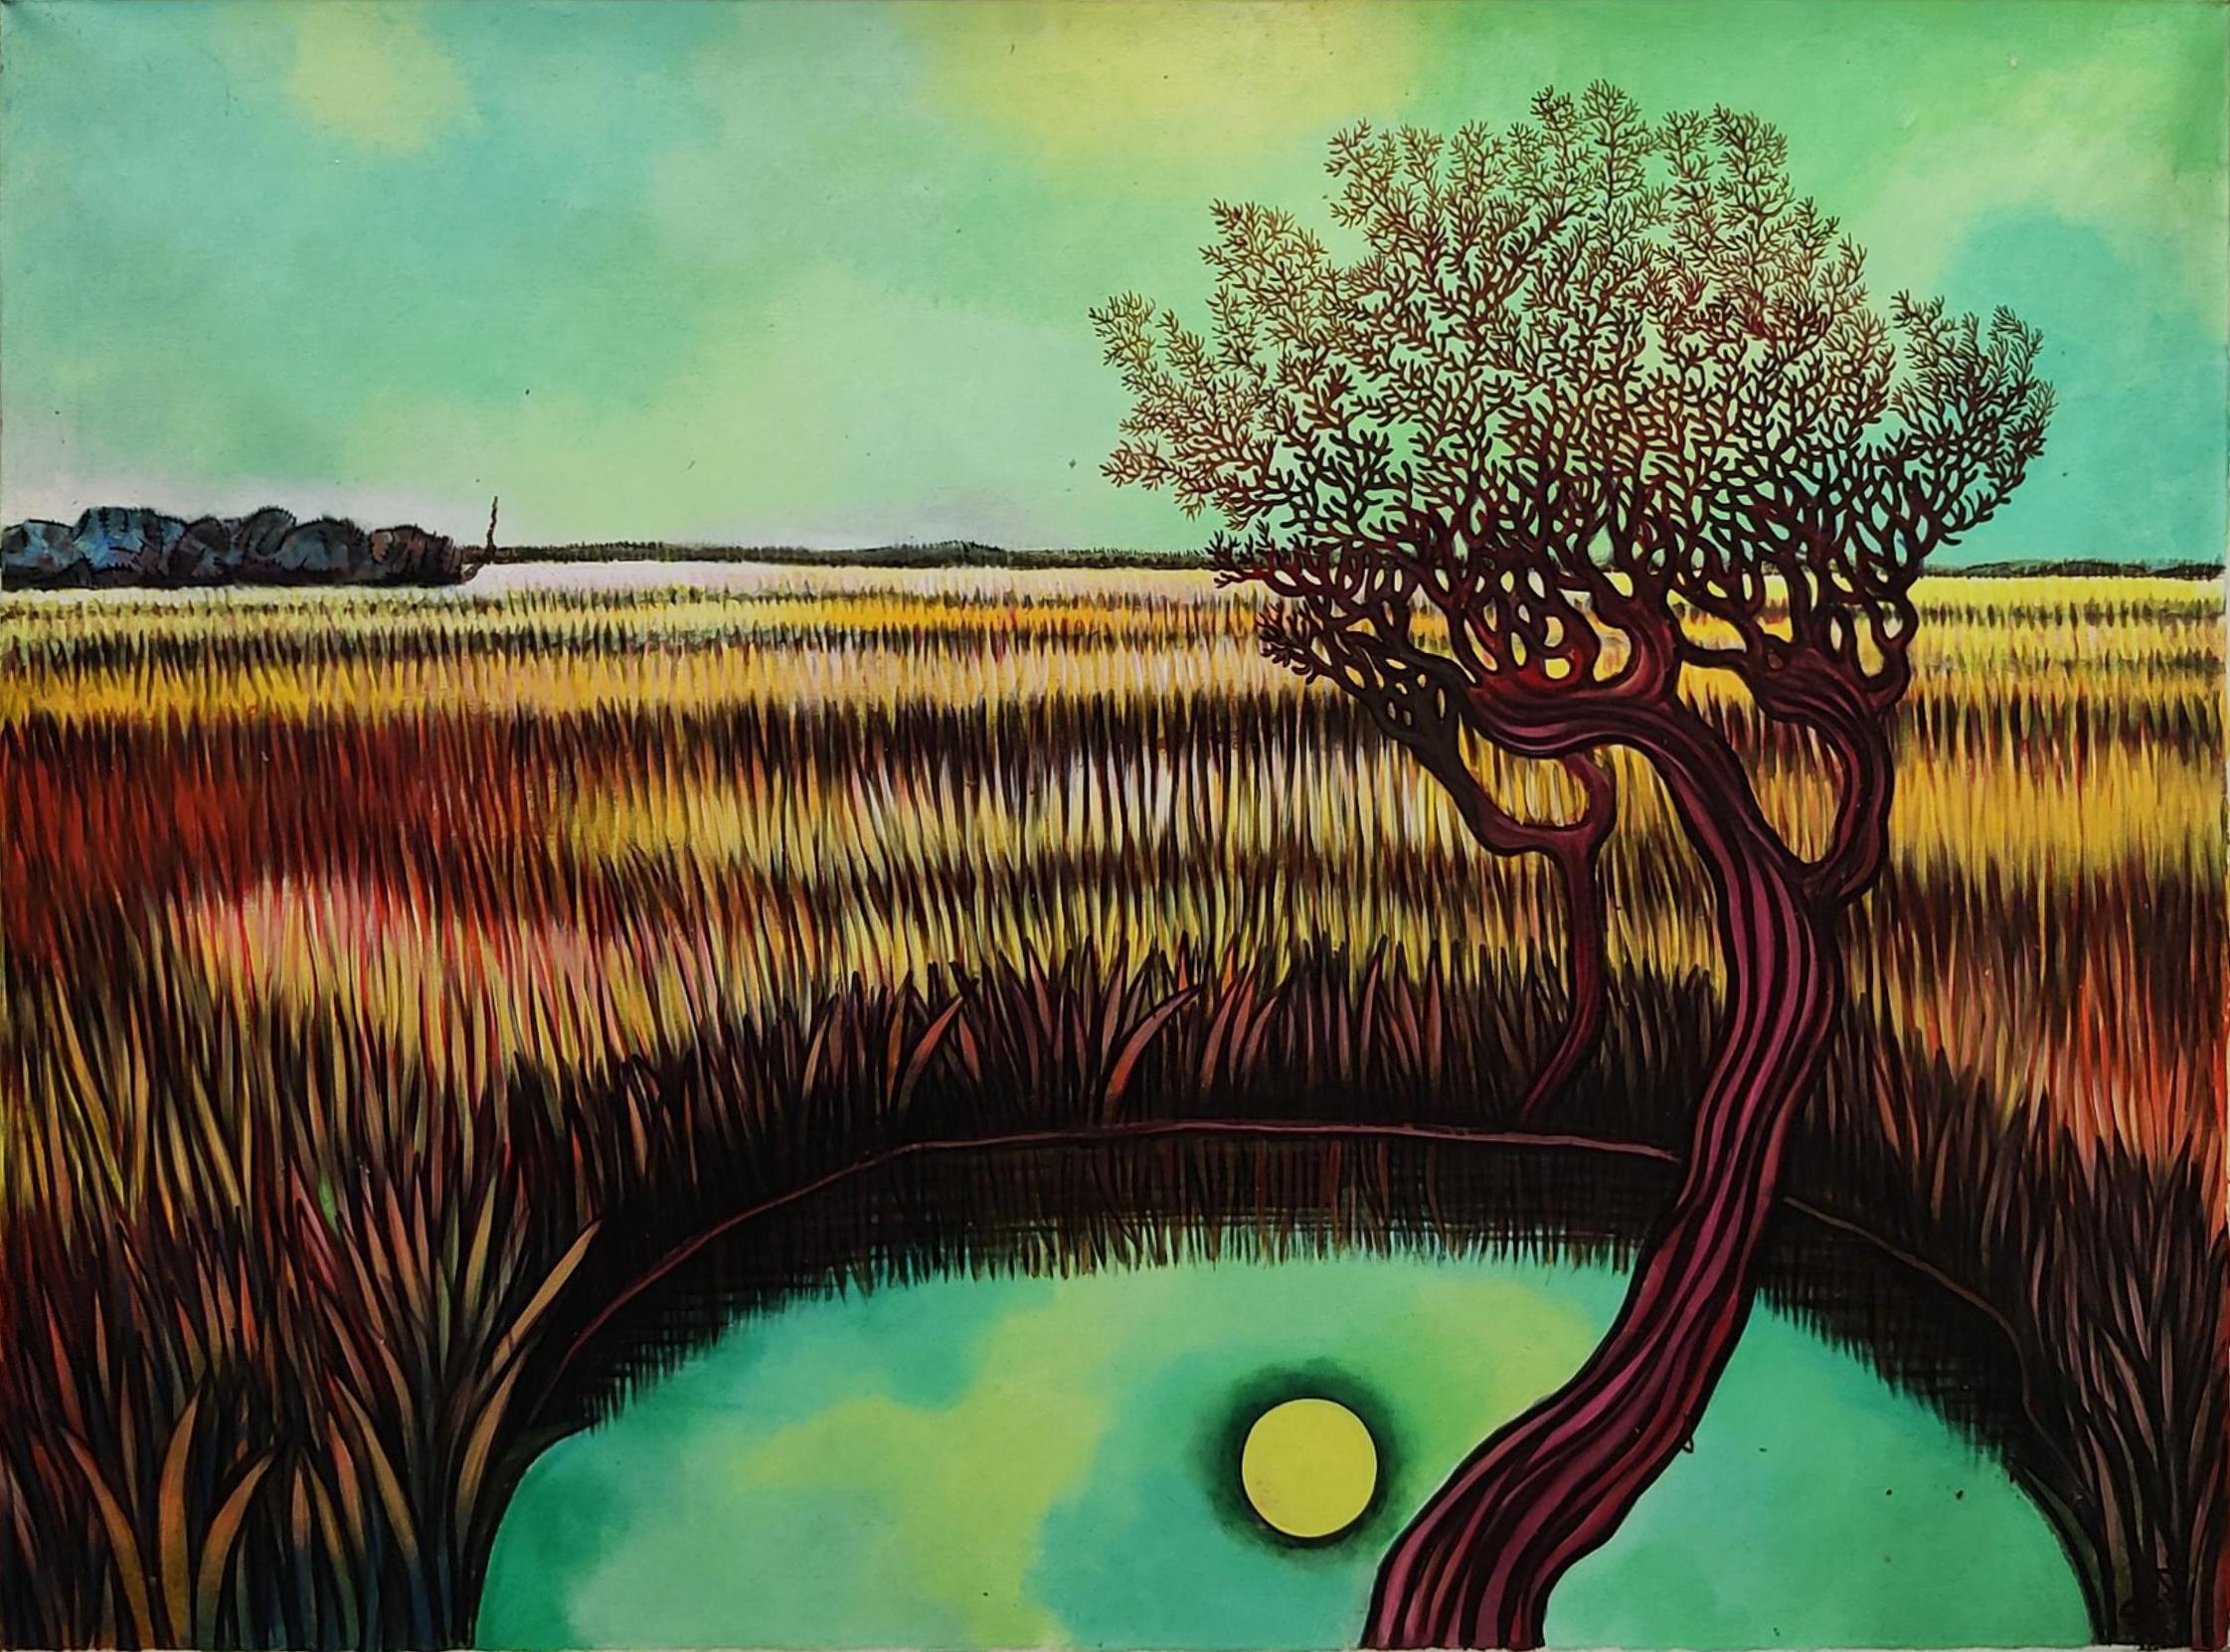 Prakash Karmarkar Landscape Painting - Landscape, Mixed Media, Green, Brown, Yellow by Modern Indian Artist "In Stock"